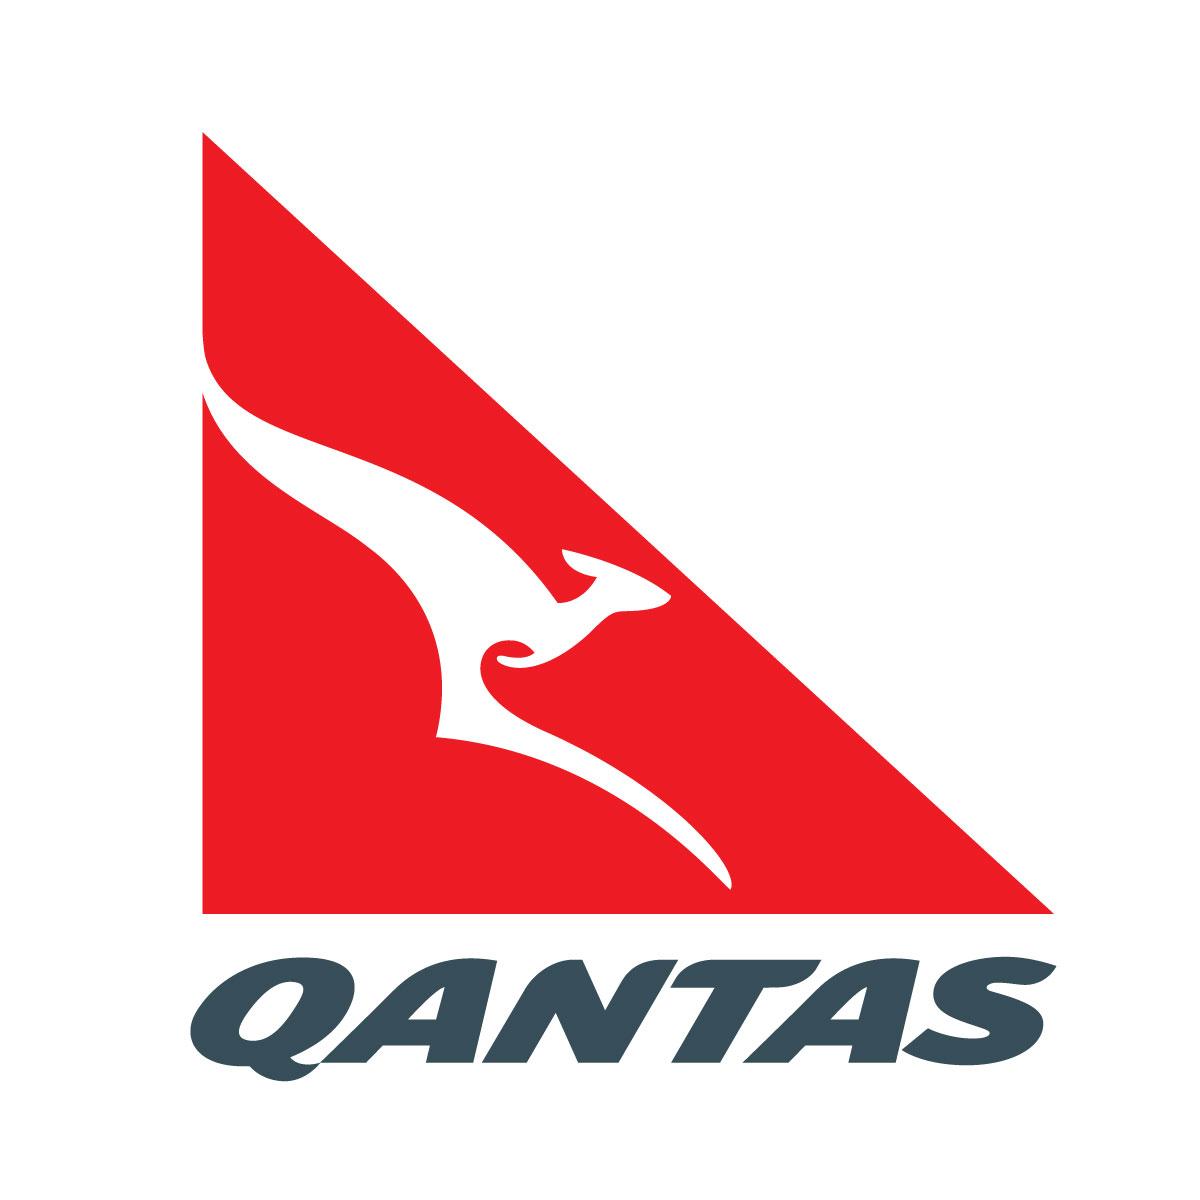 Airline with Kangaroo Logo - Qantas: flights for the flying kangaroos